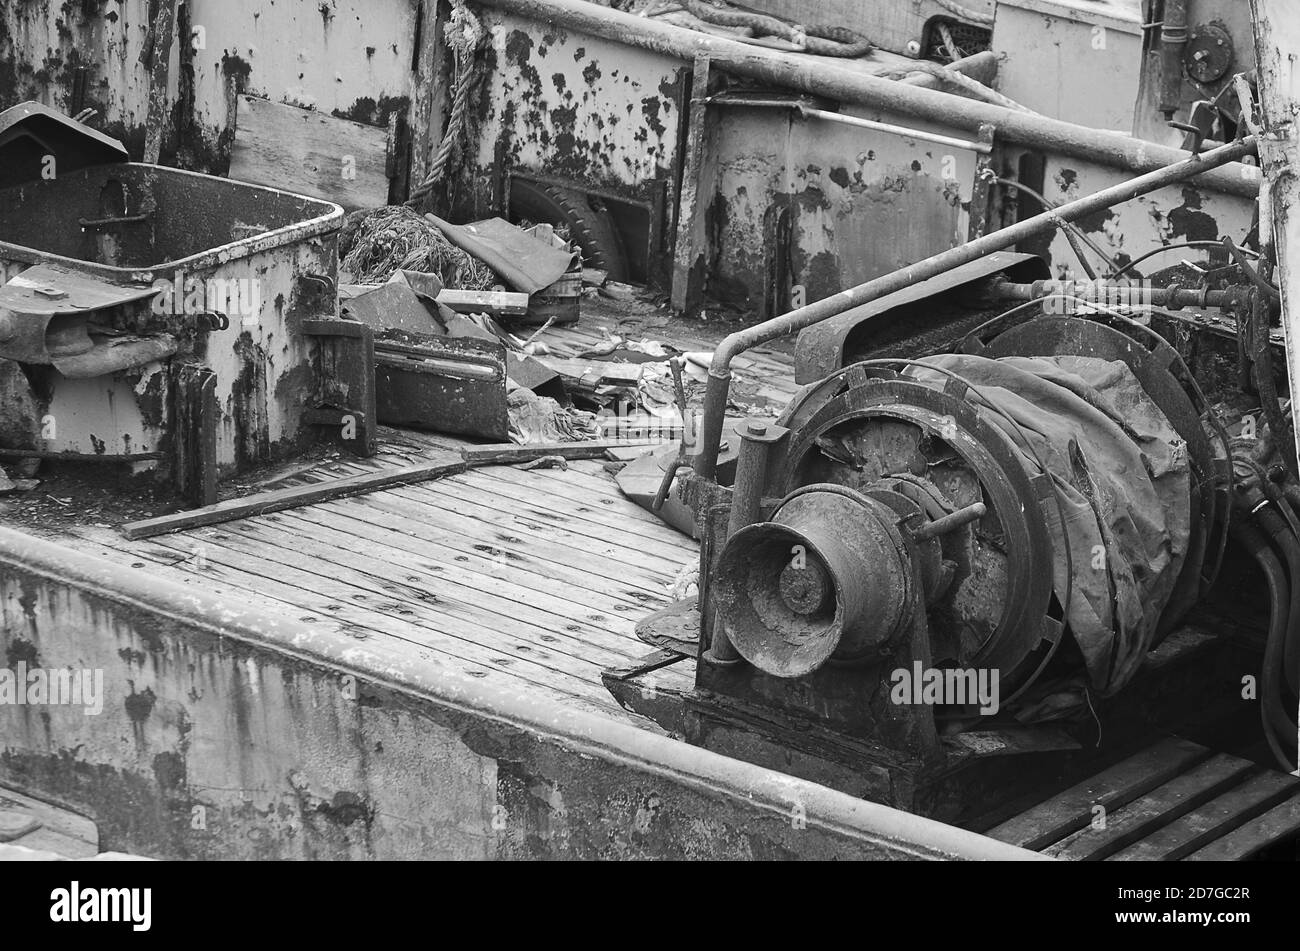 Grayscale shot of old fishing boat machinery Stock Photo